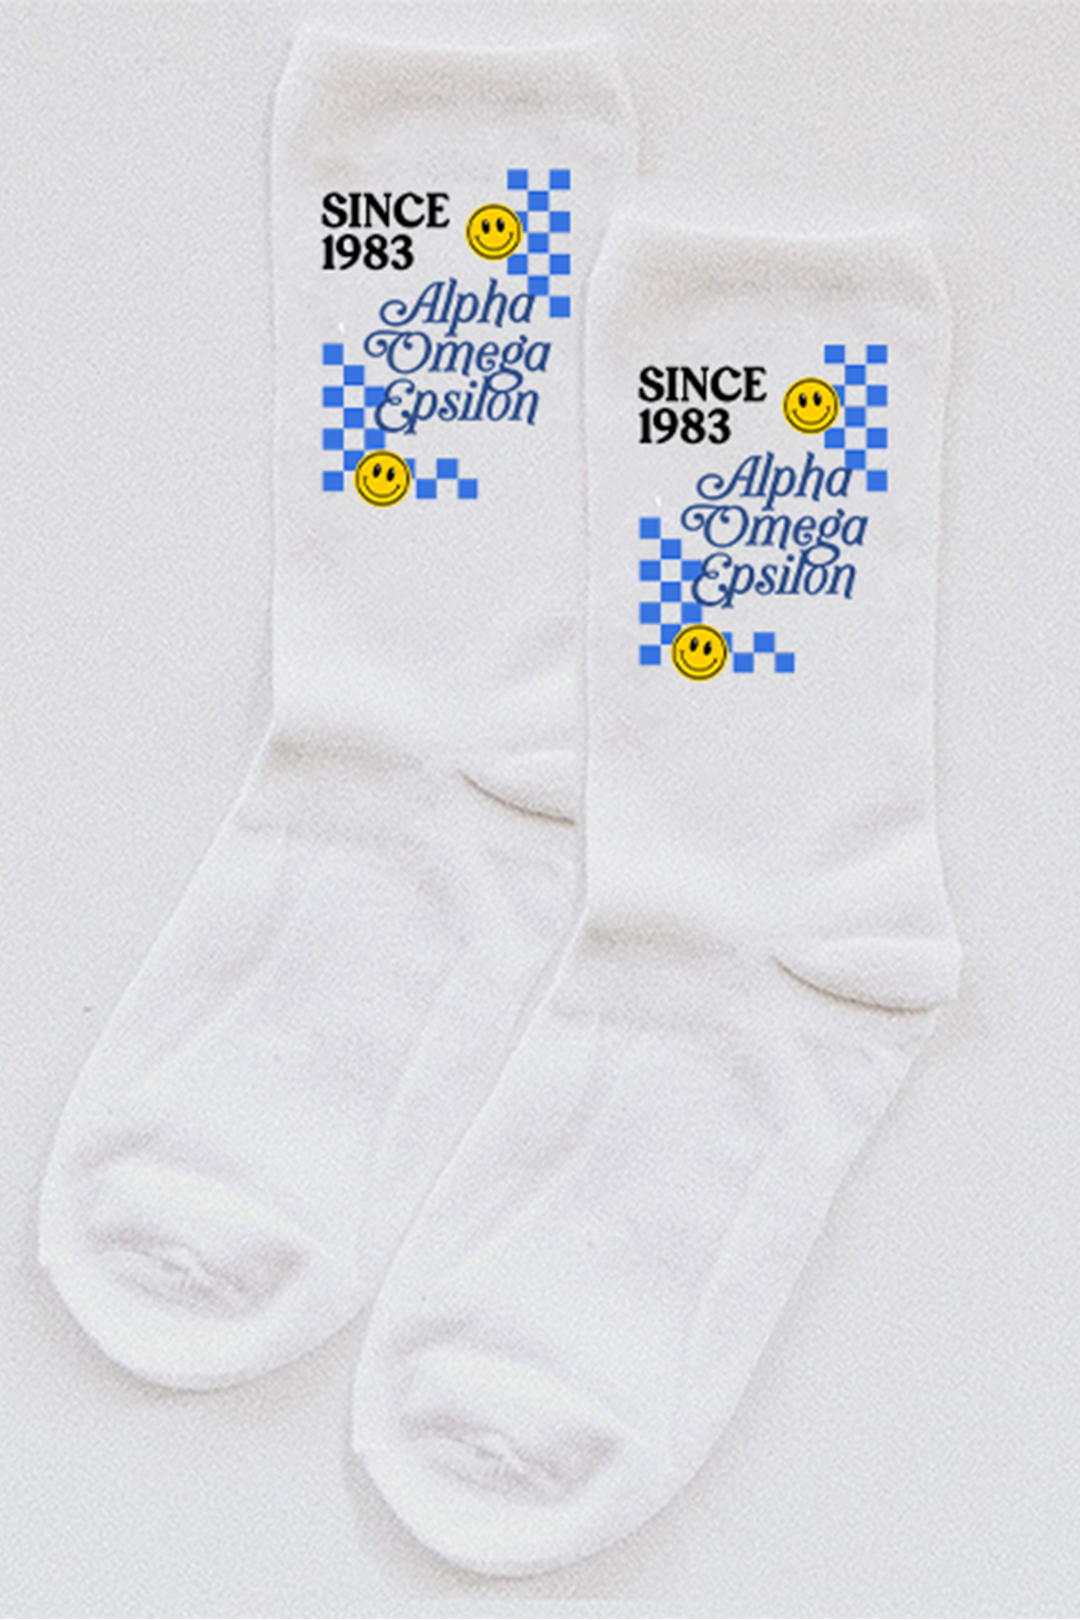 Blue Checkered socks - Alpha Omega Epsilon